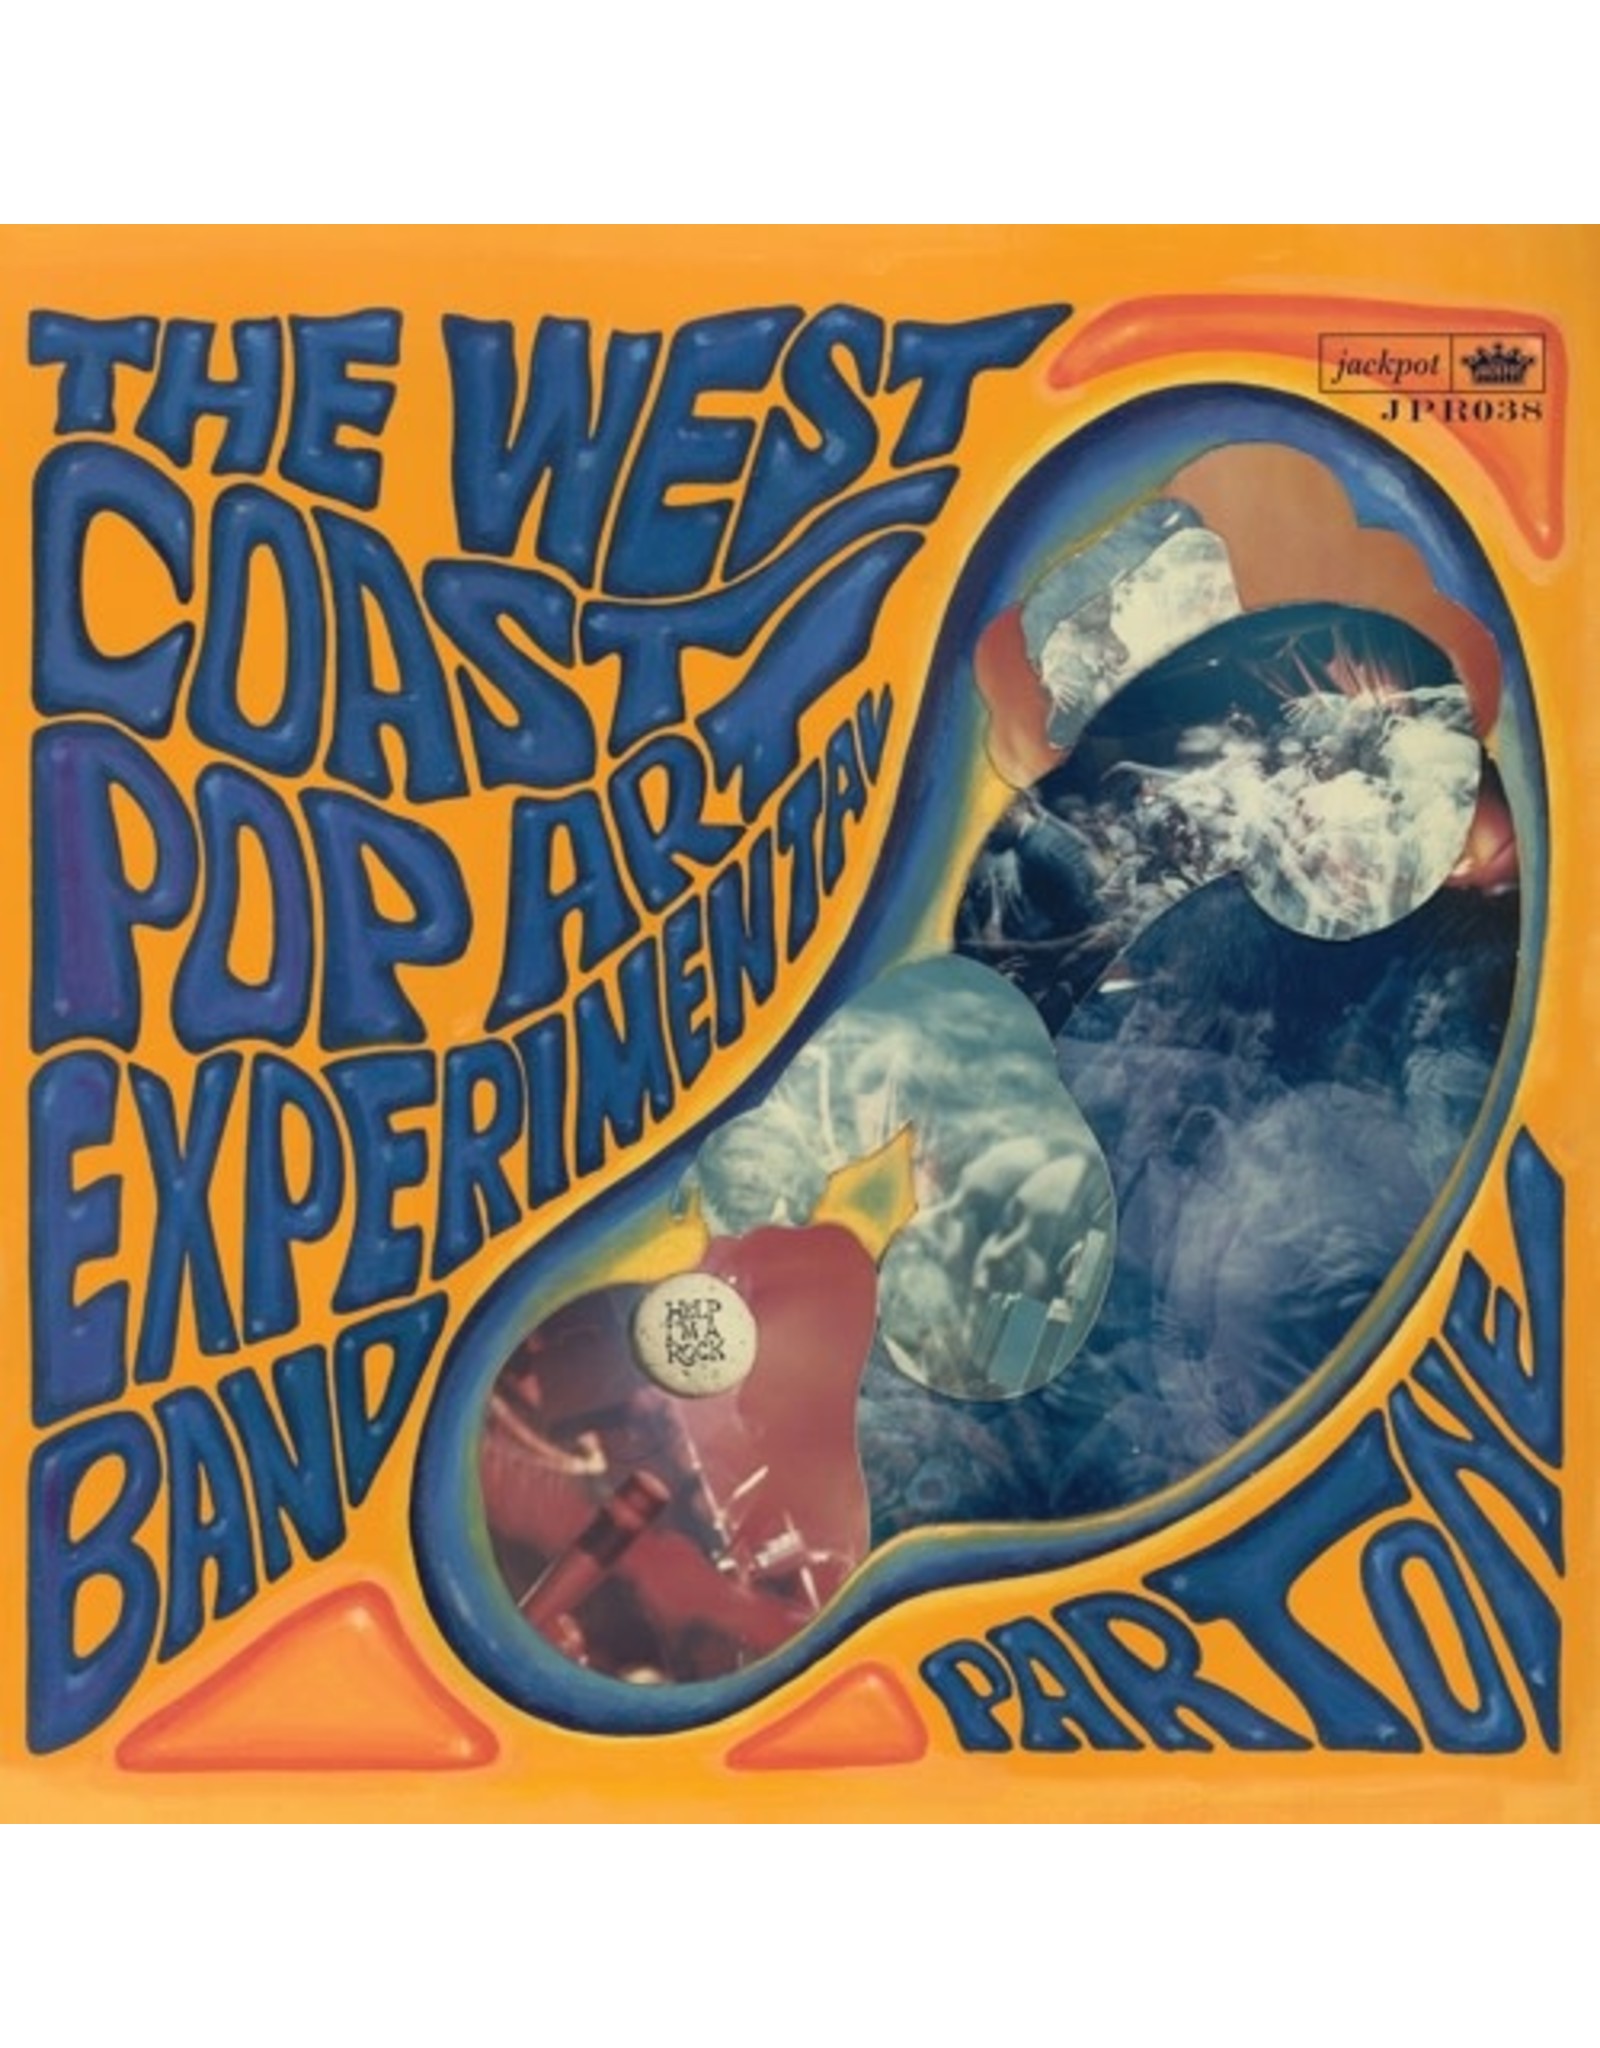 Jackpot West Coast Pop Art Experimental Band: Part One LP